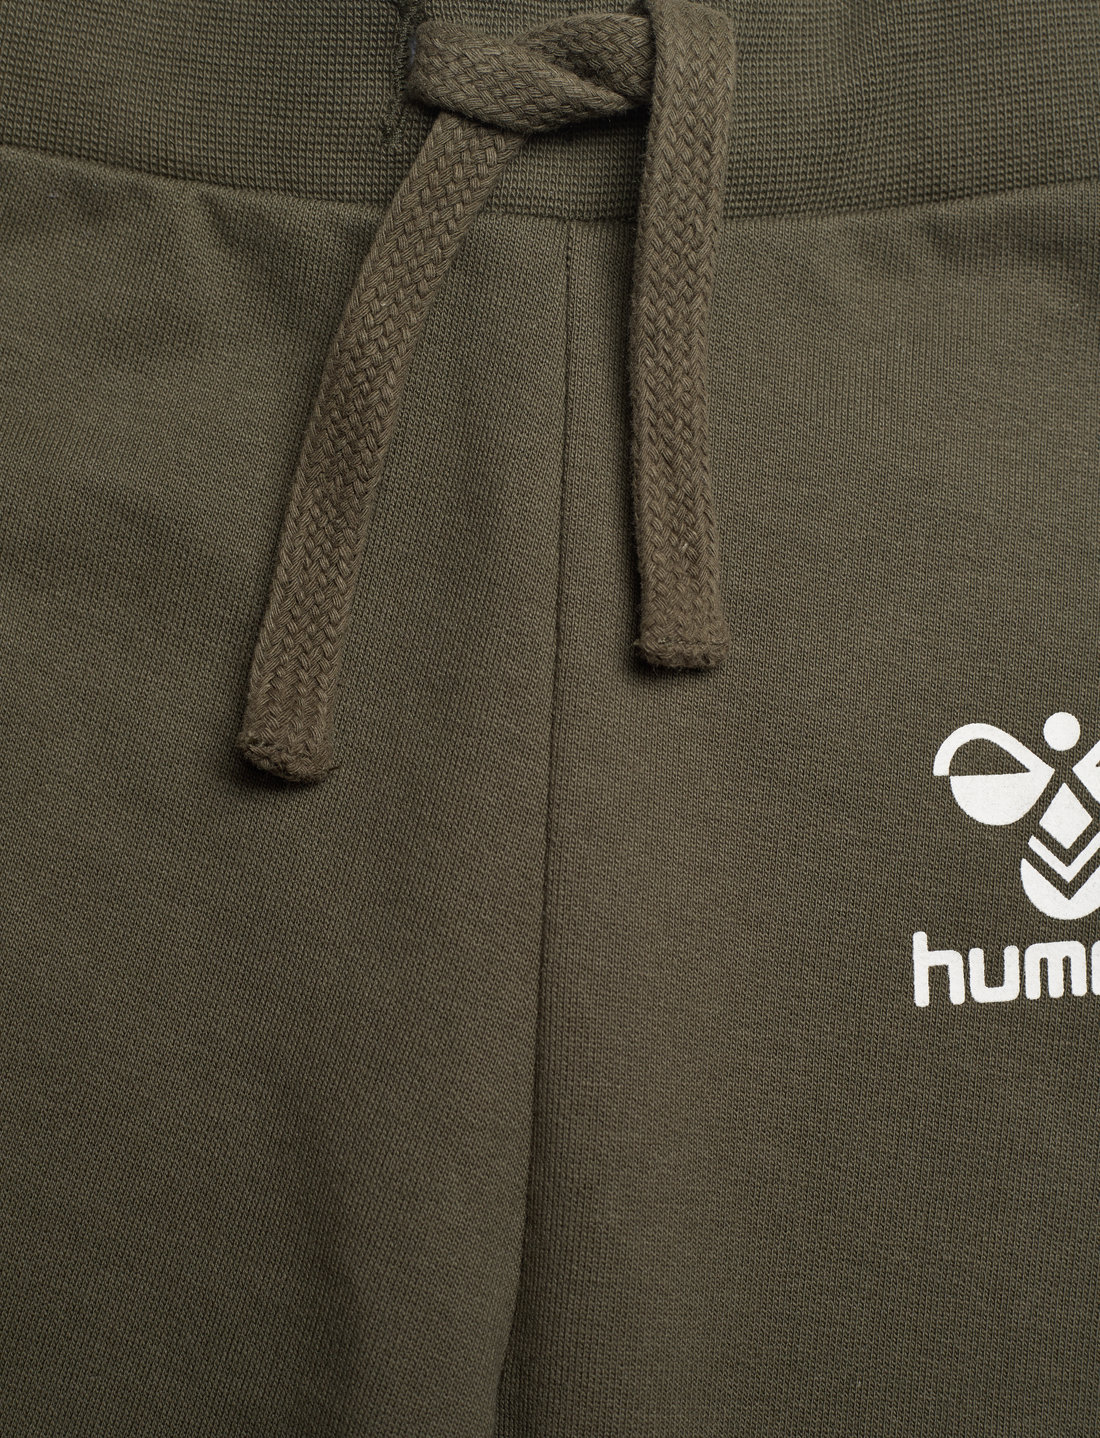 Hummel Hmlneel Pants - Hosen